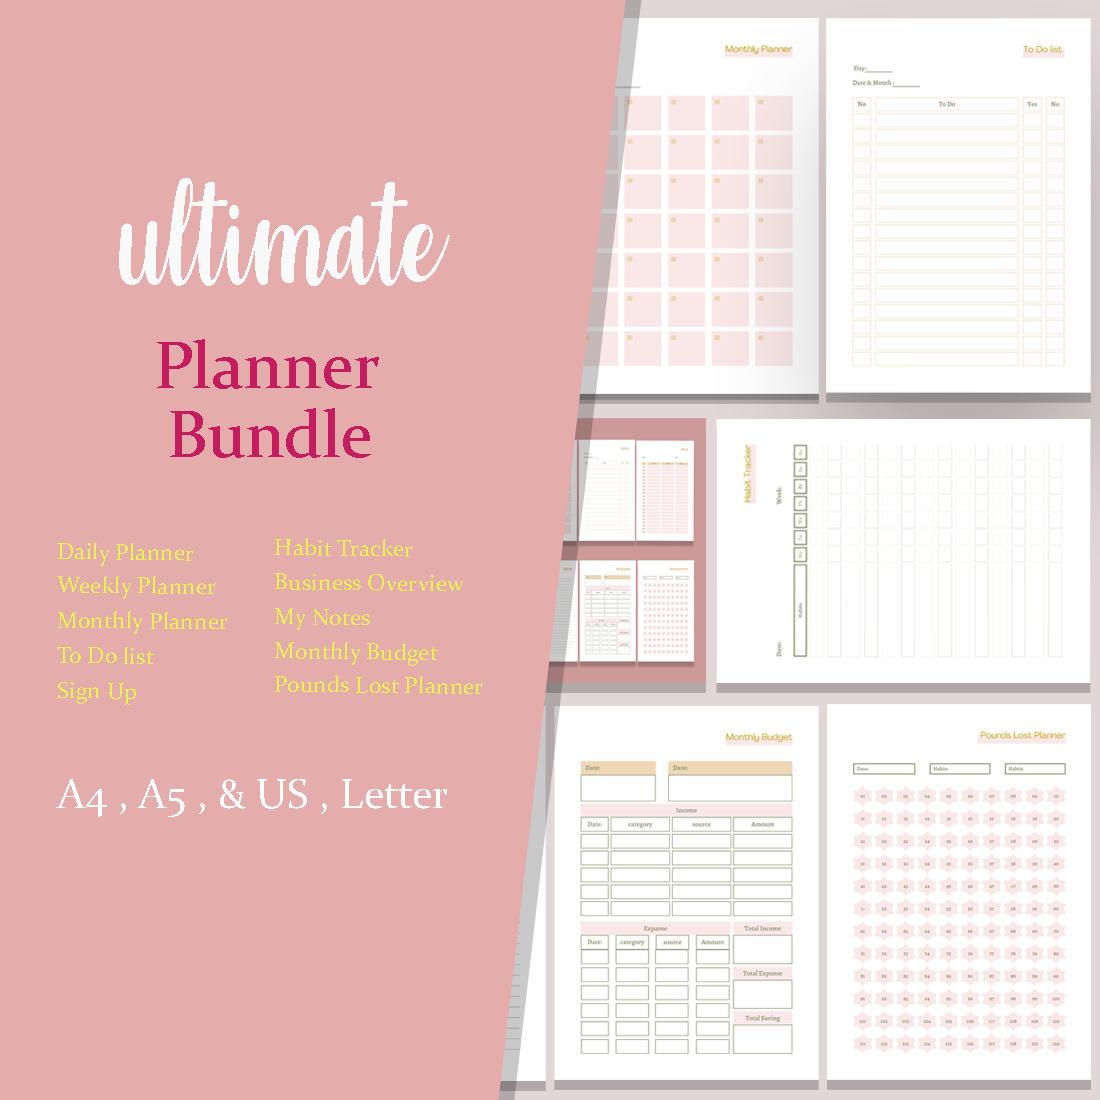 Ultimate Planner Canva Bundle cover image.